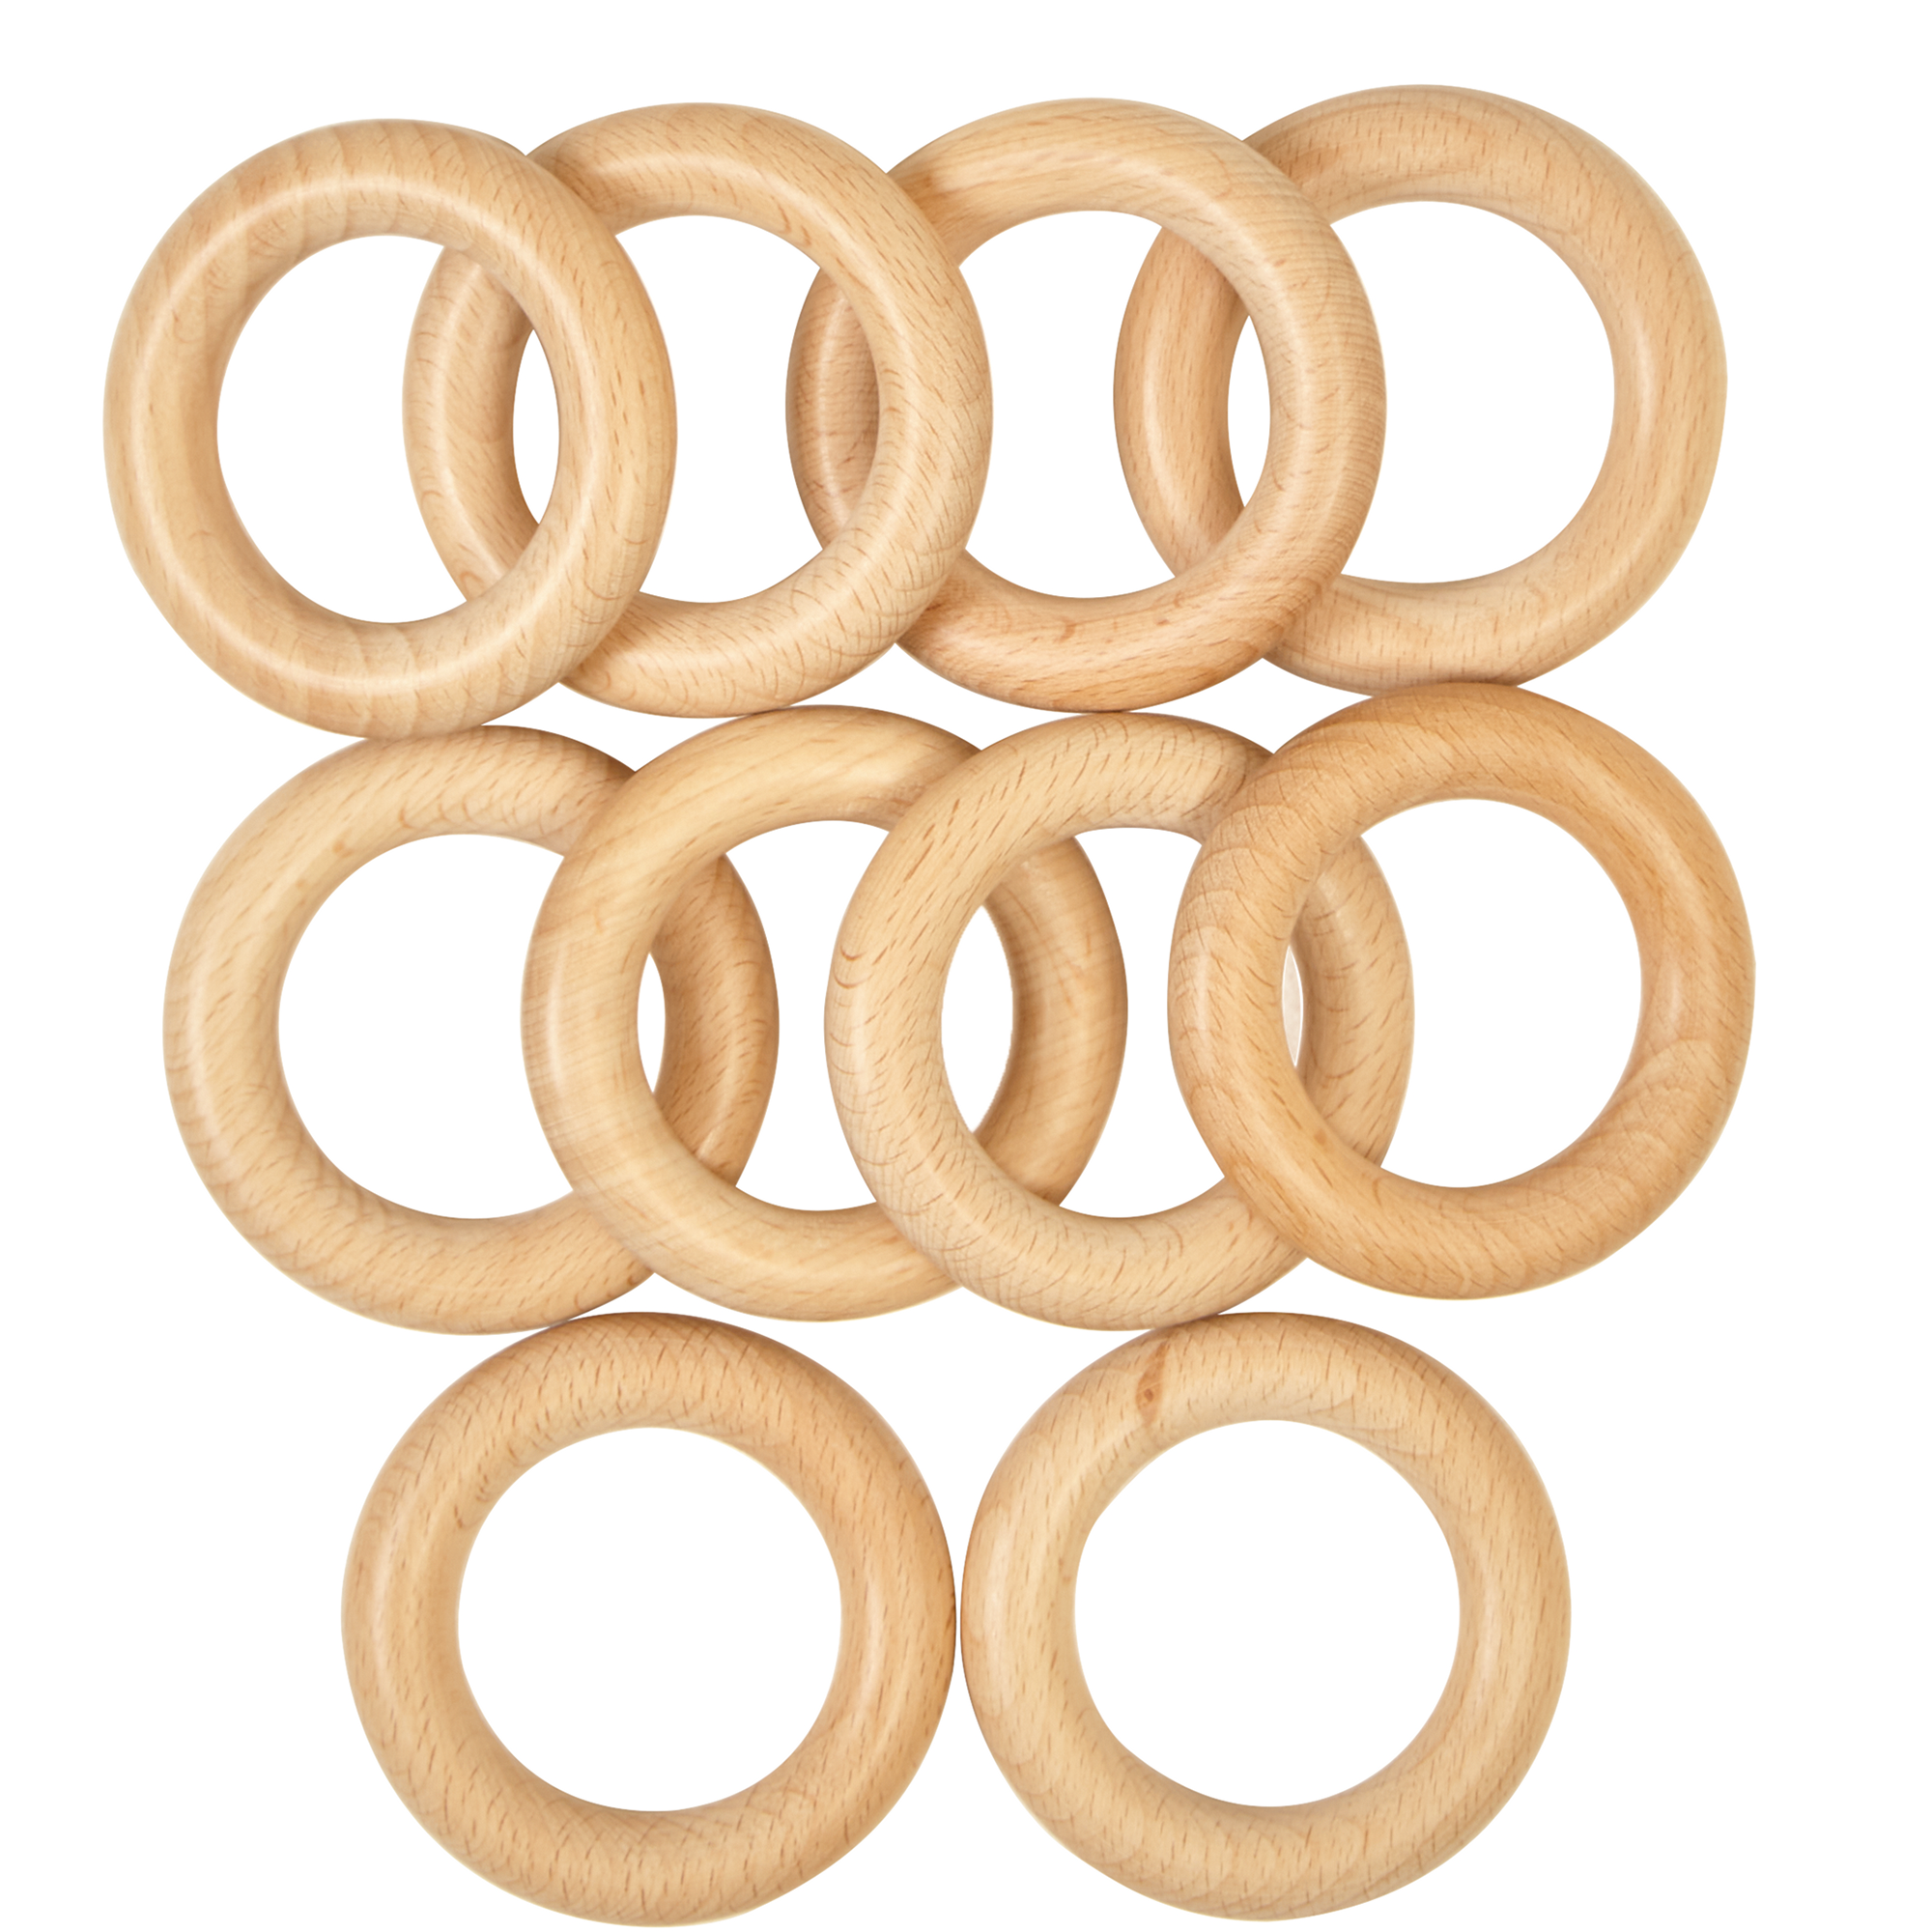 Wooden Sensory Rings Pack of 10